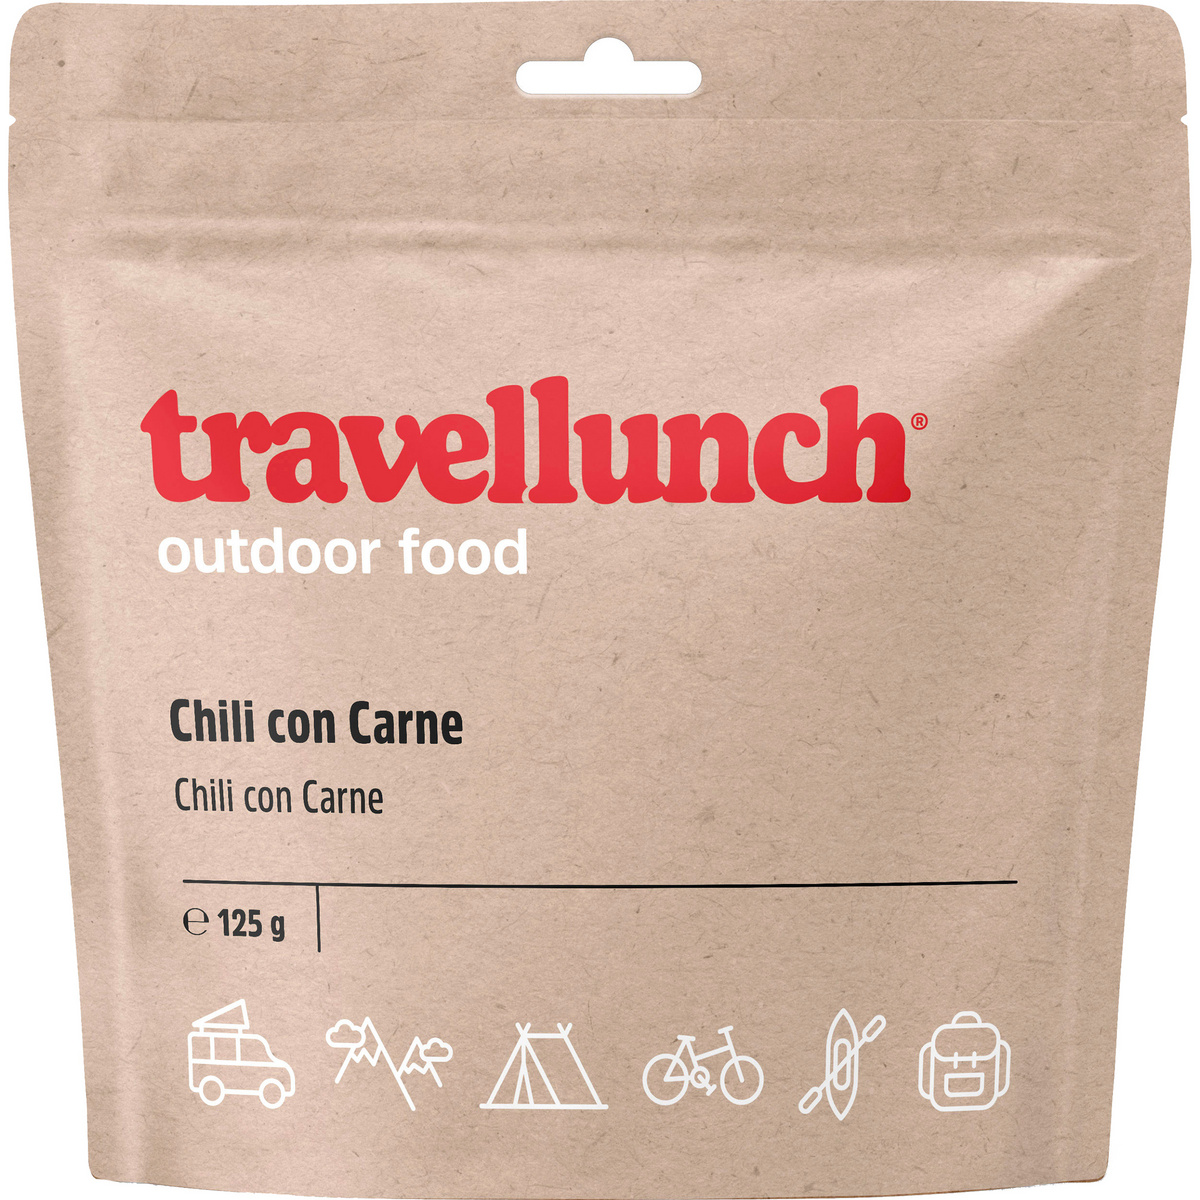 Image of Travellunch Chili con Carne